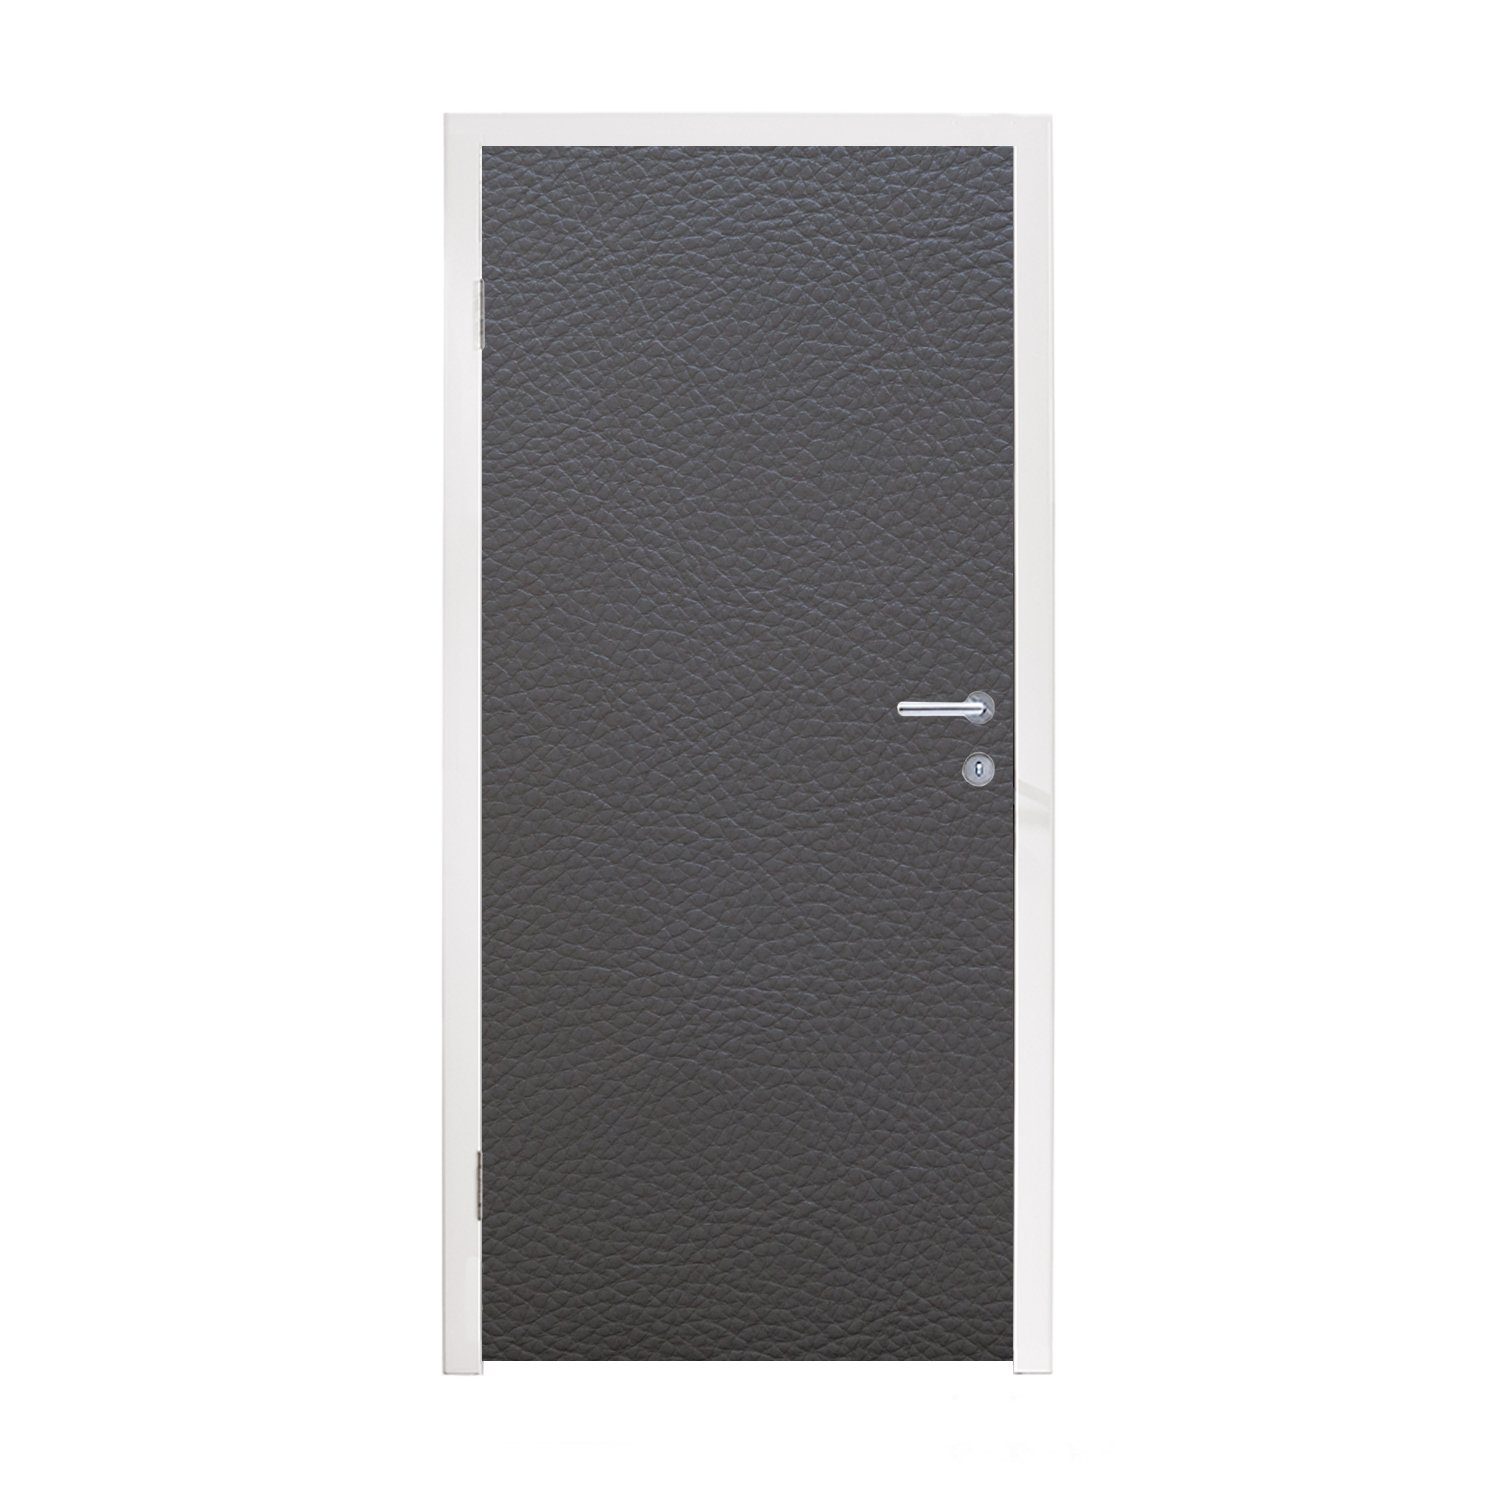 MuchoWow Türtapete Leder - Strukturiert - Leder-Optik - Grau, Matt, bedruckt, (1 St), Fototapete für Tür, Türaufkleber, 75x205 cm